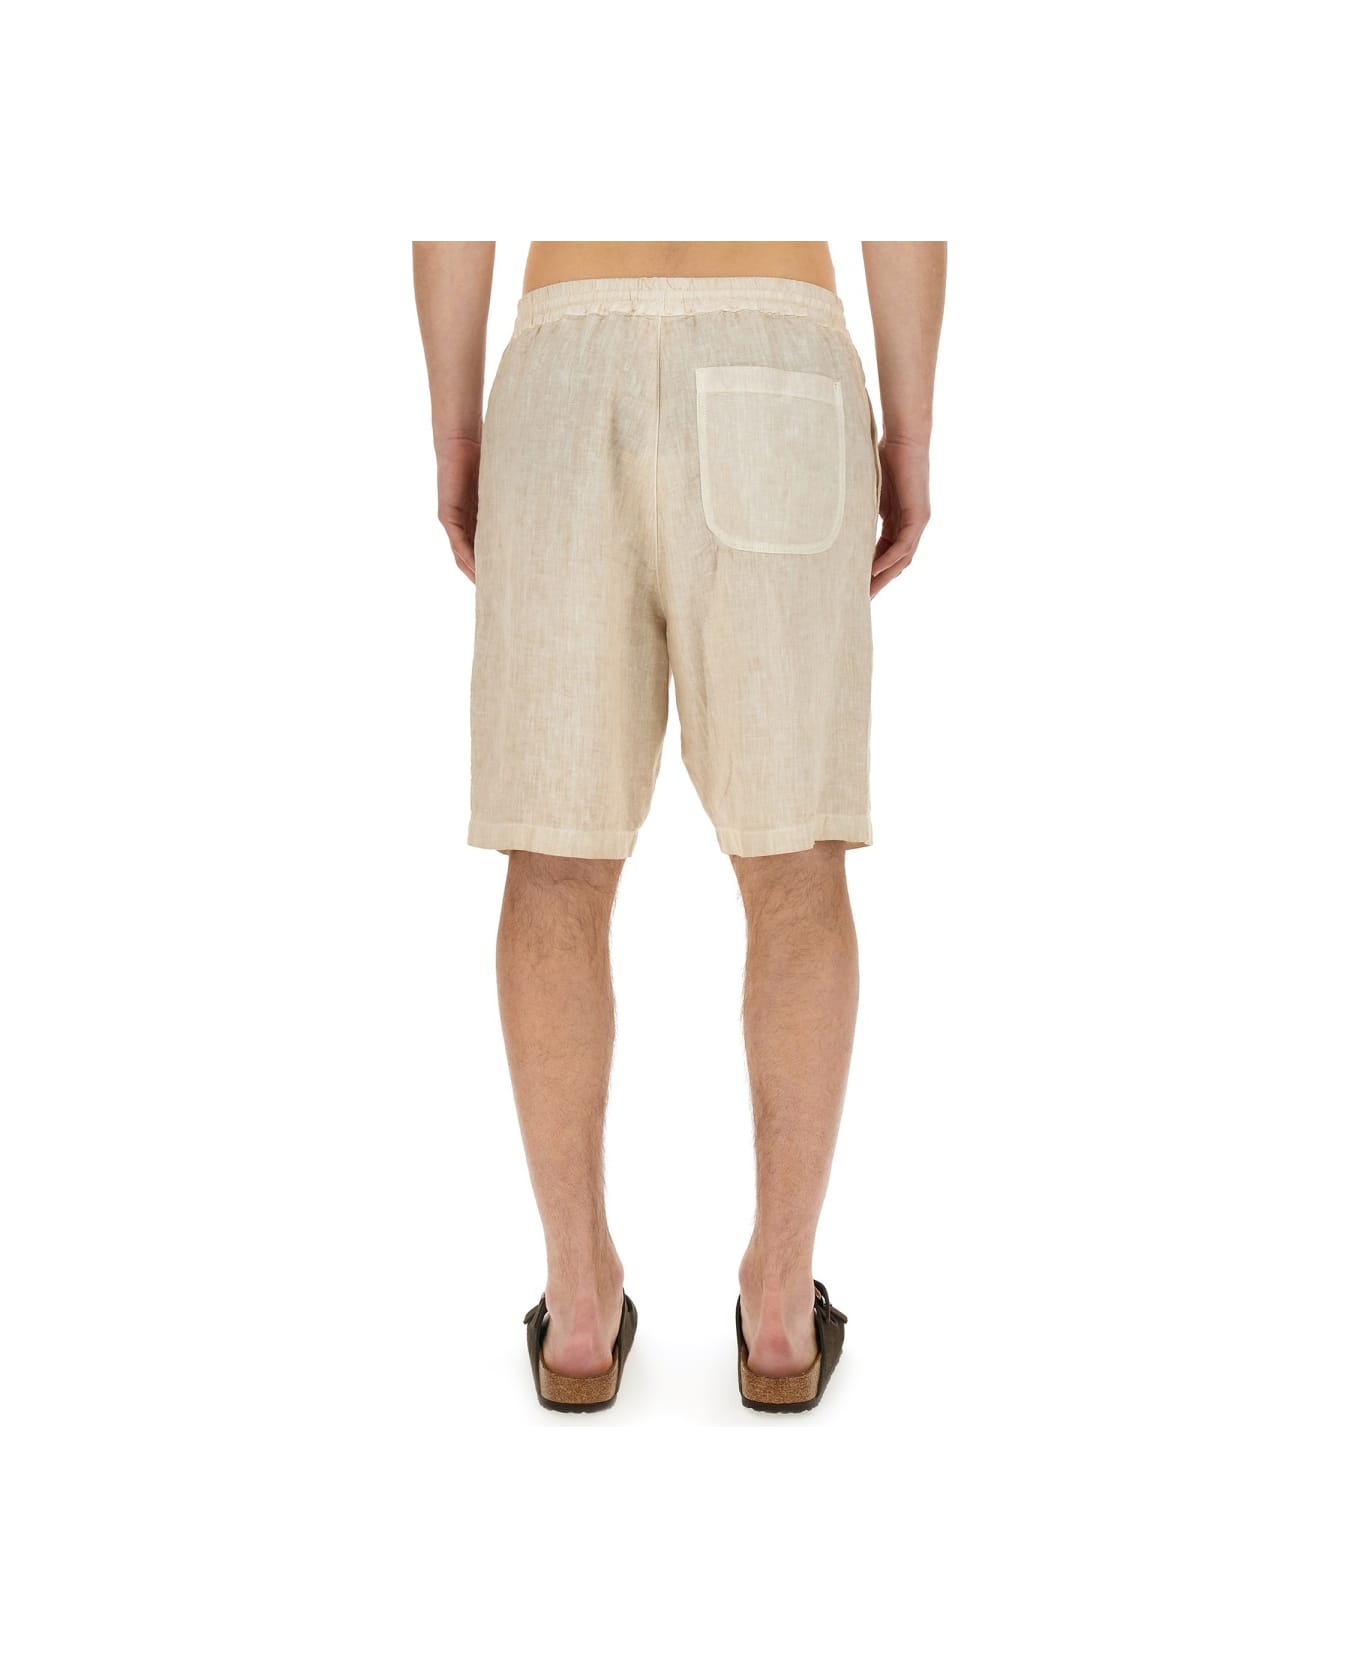 120% Lino Linen Bermuda Shorts - IVORY